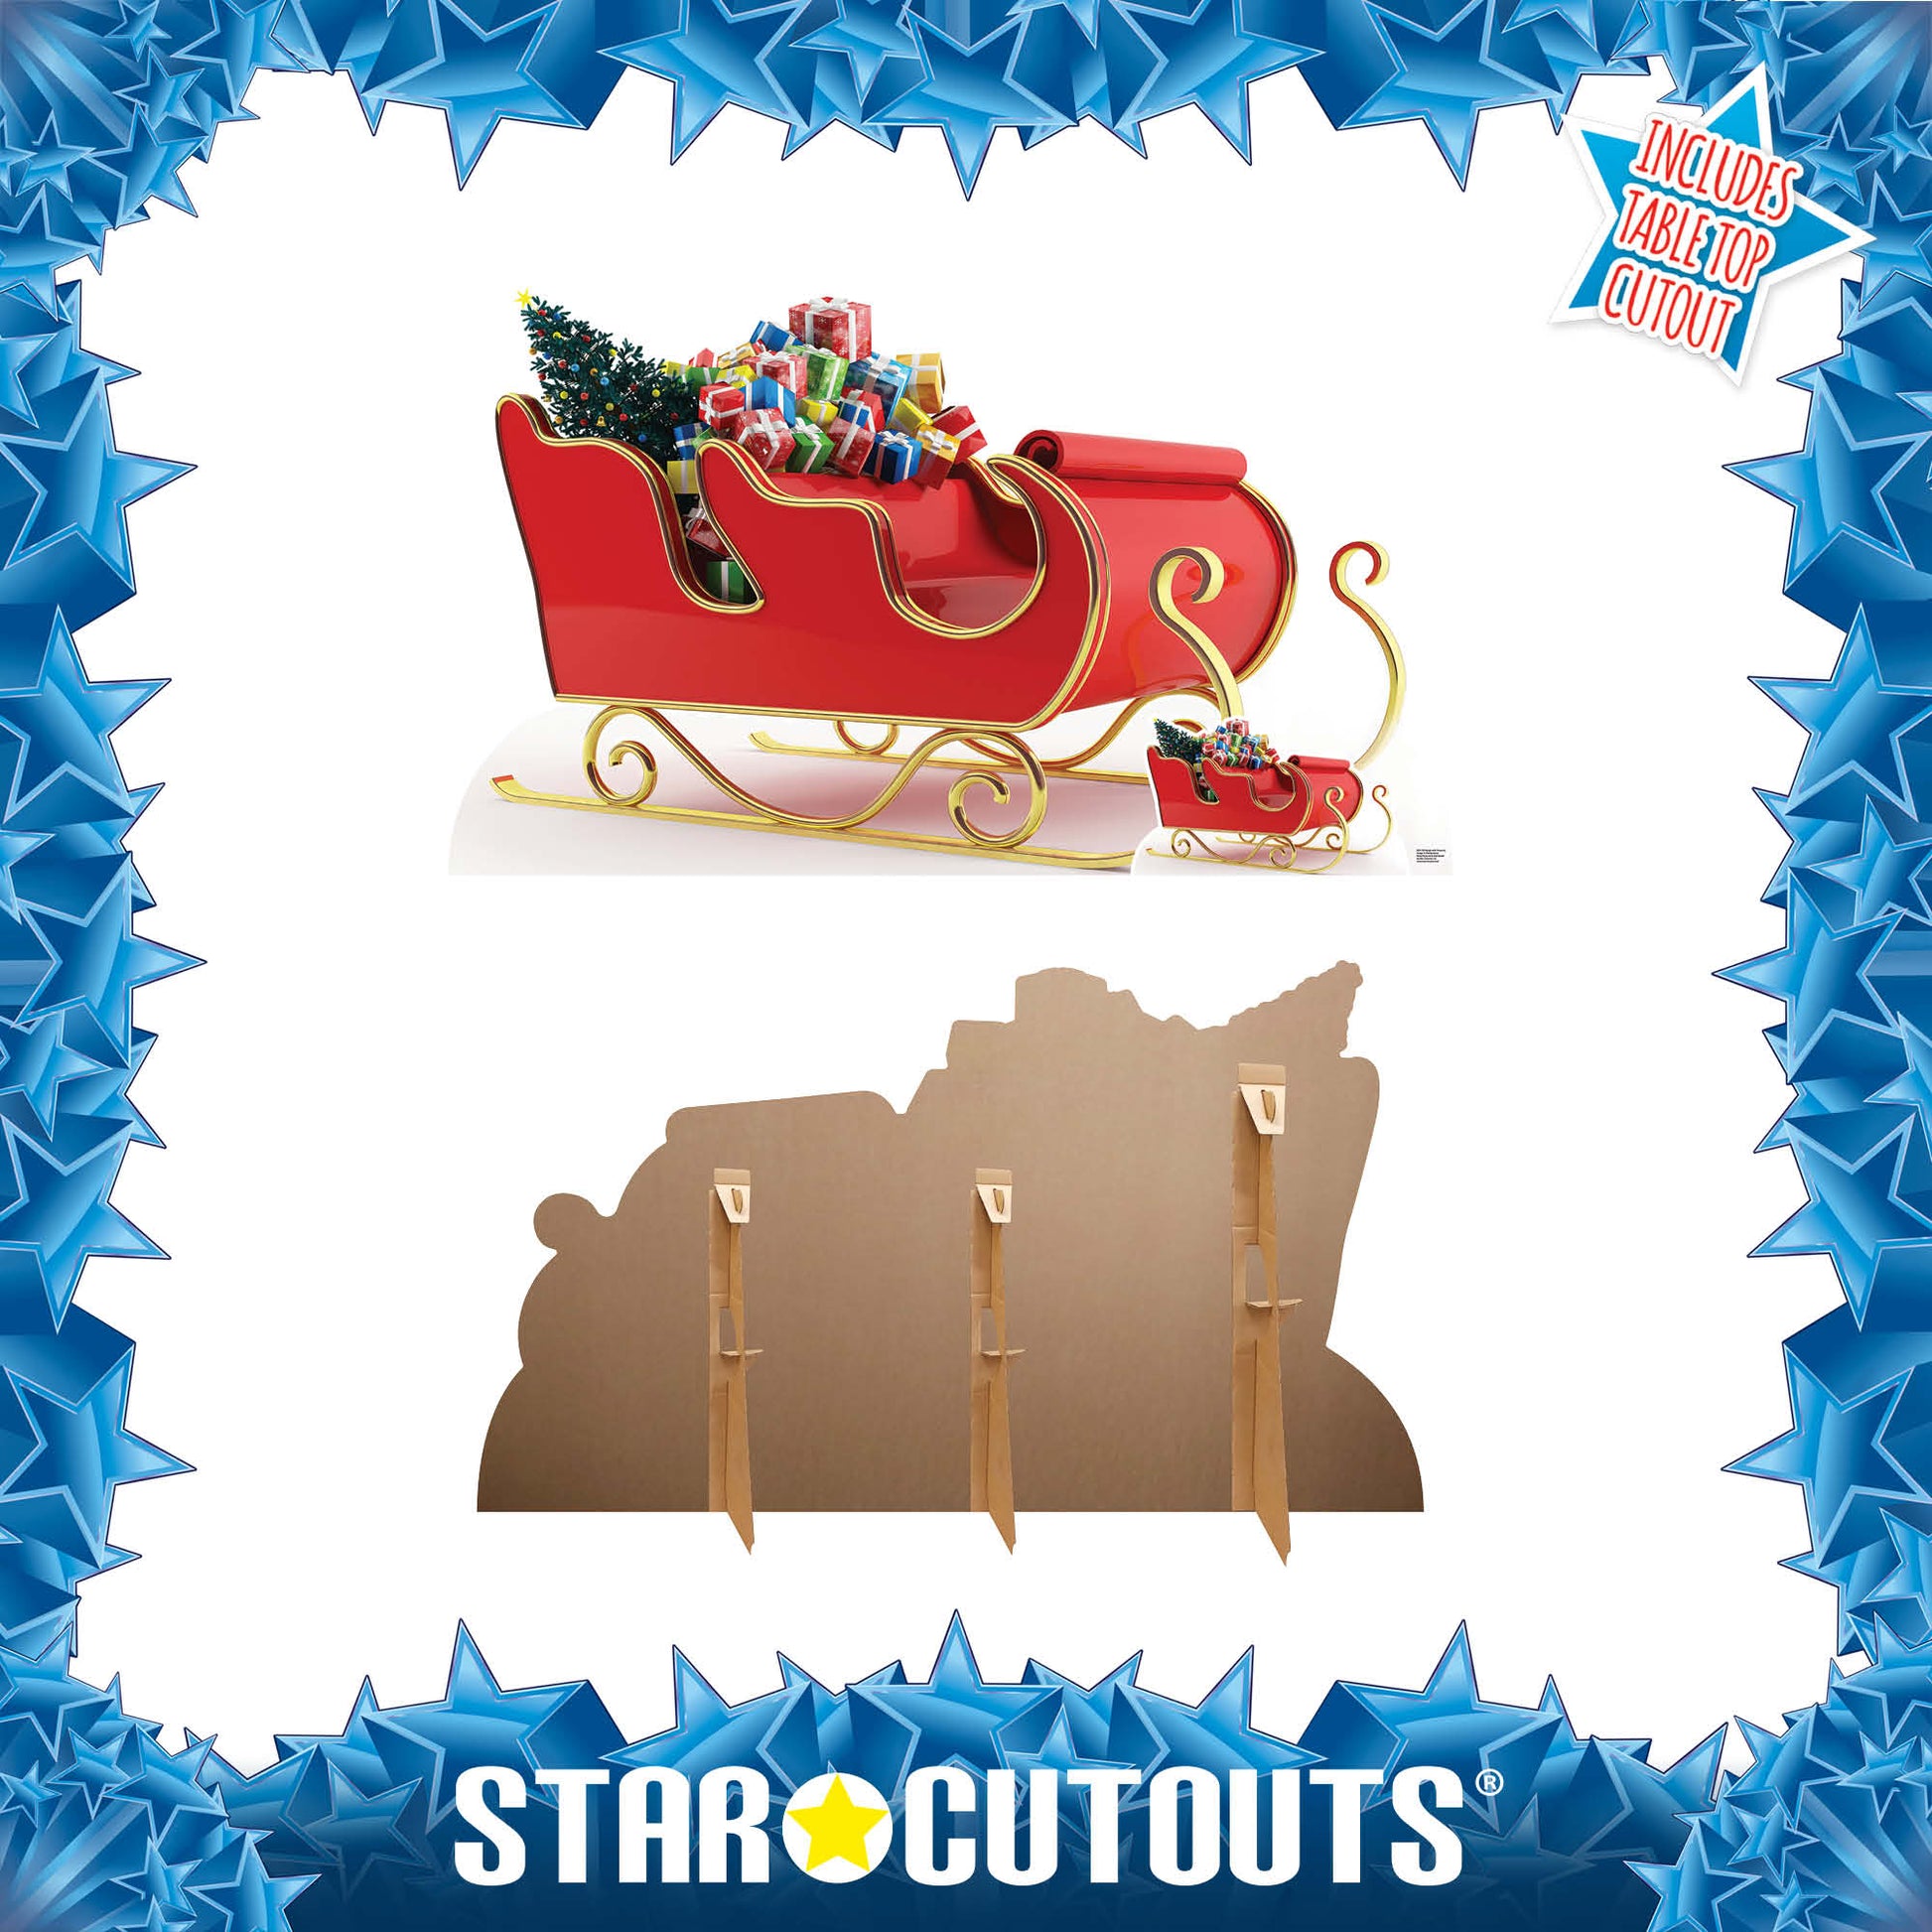 SC4198 Christmas Santa Sleigh with Presents Cardboard Cut Out Height 93cm - Star Cutouts